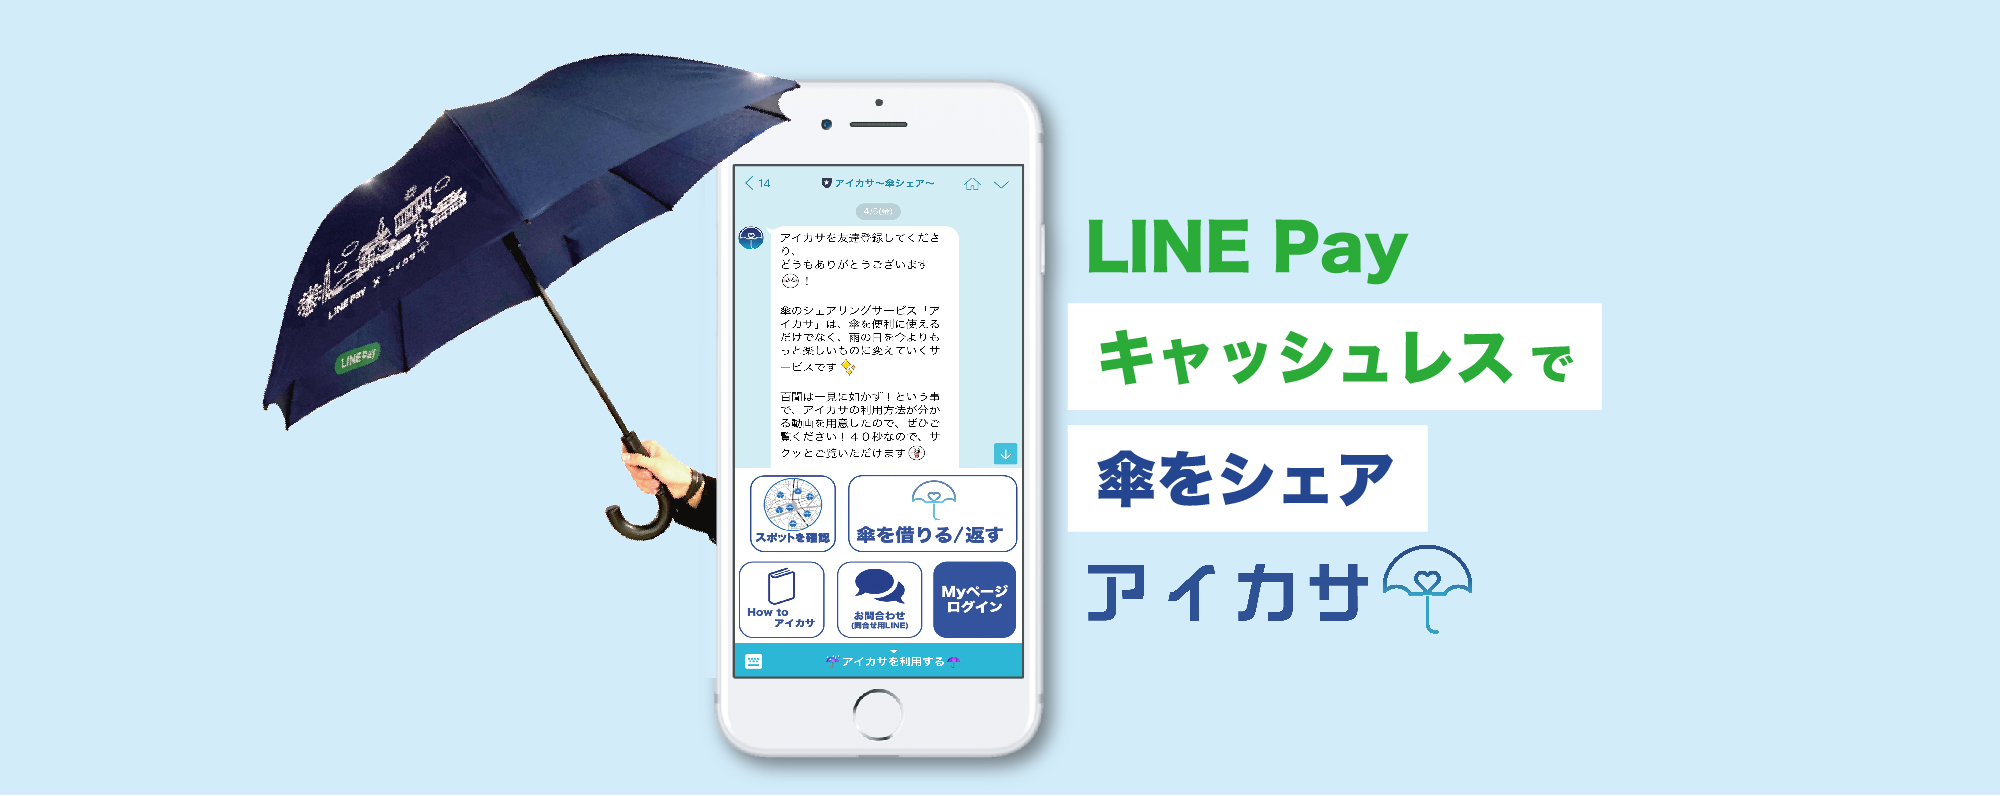 LINE Umbrella Sharing Fukuoka City Japan